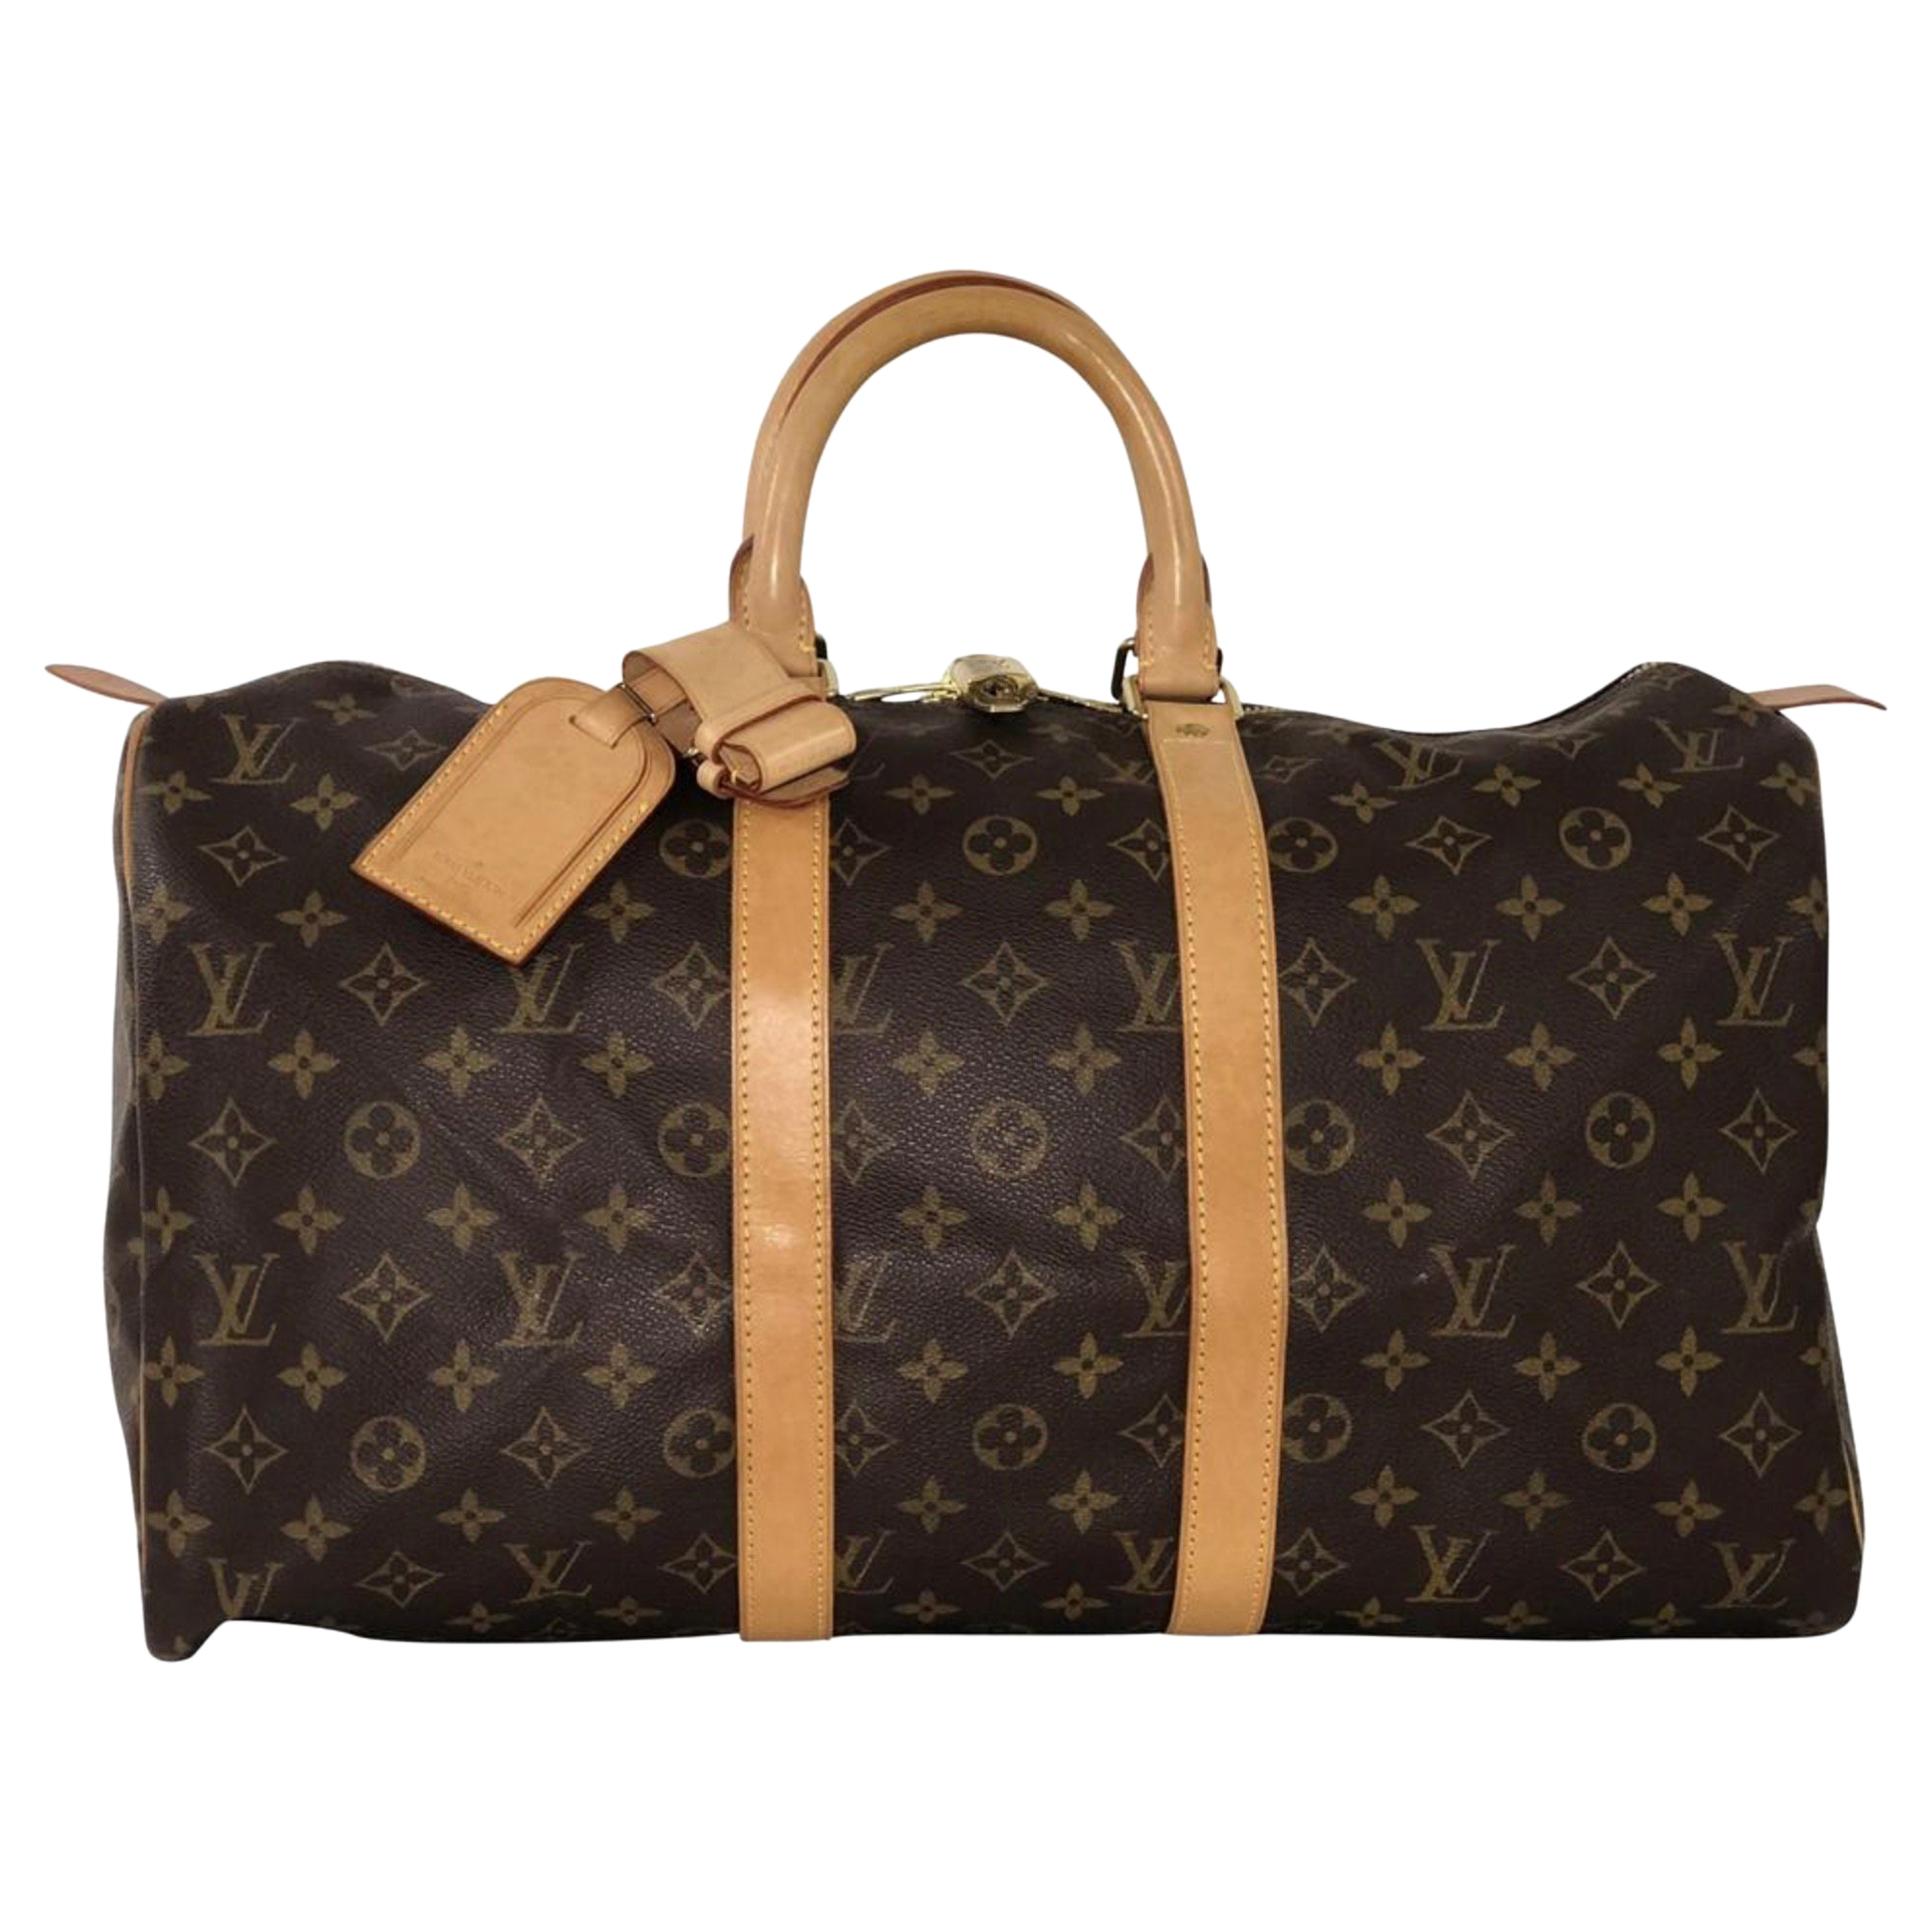  Louis Vuitton Monogram Keepall 45 Travel Duffle Handbag For Sale